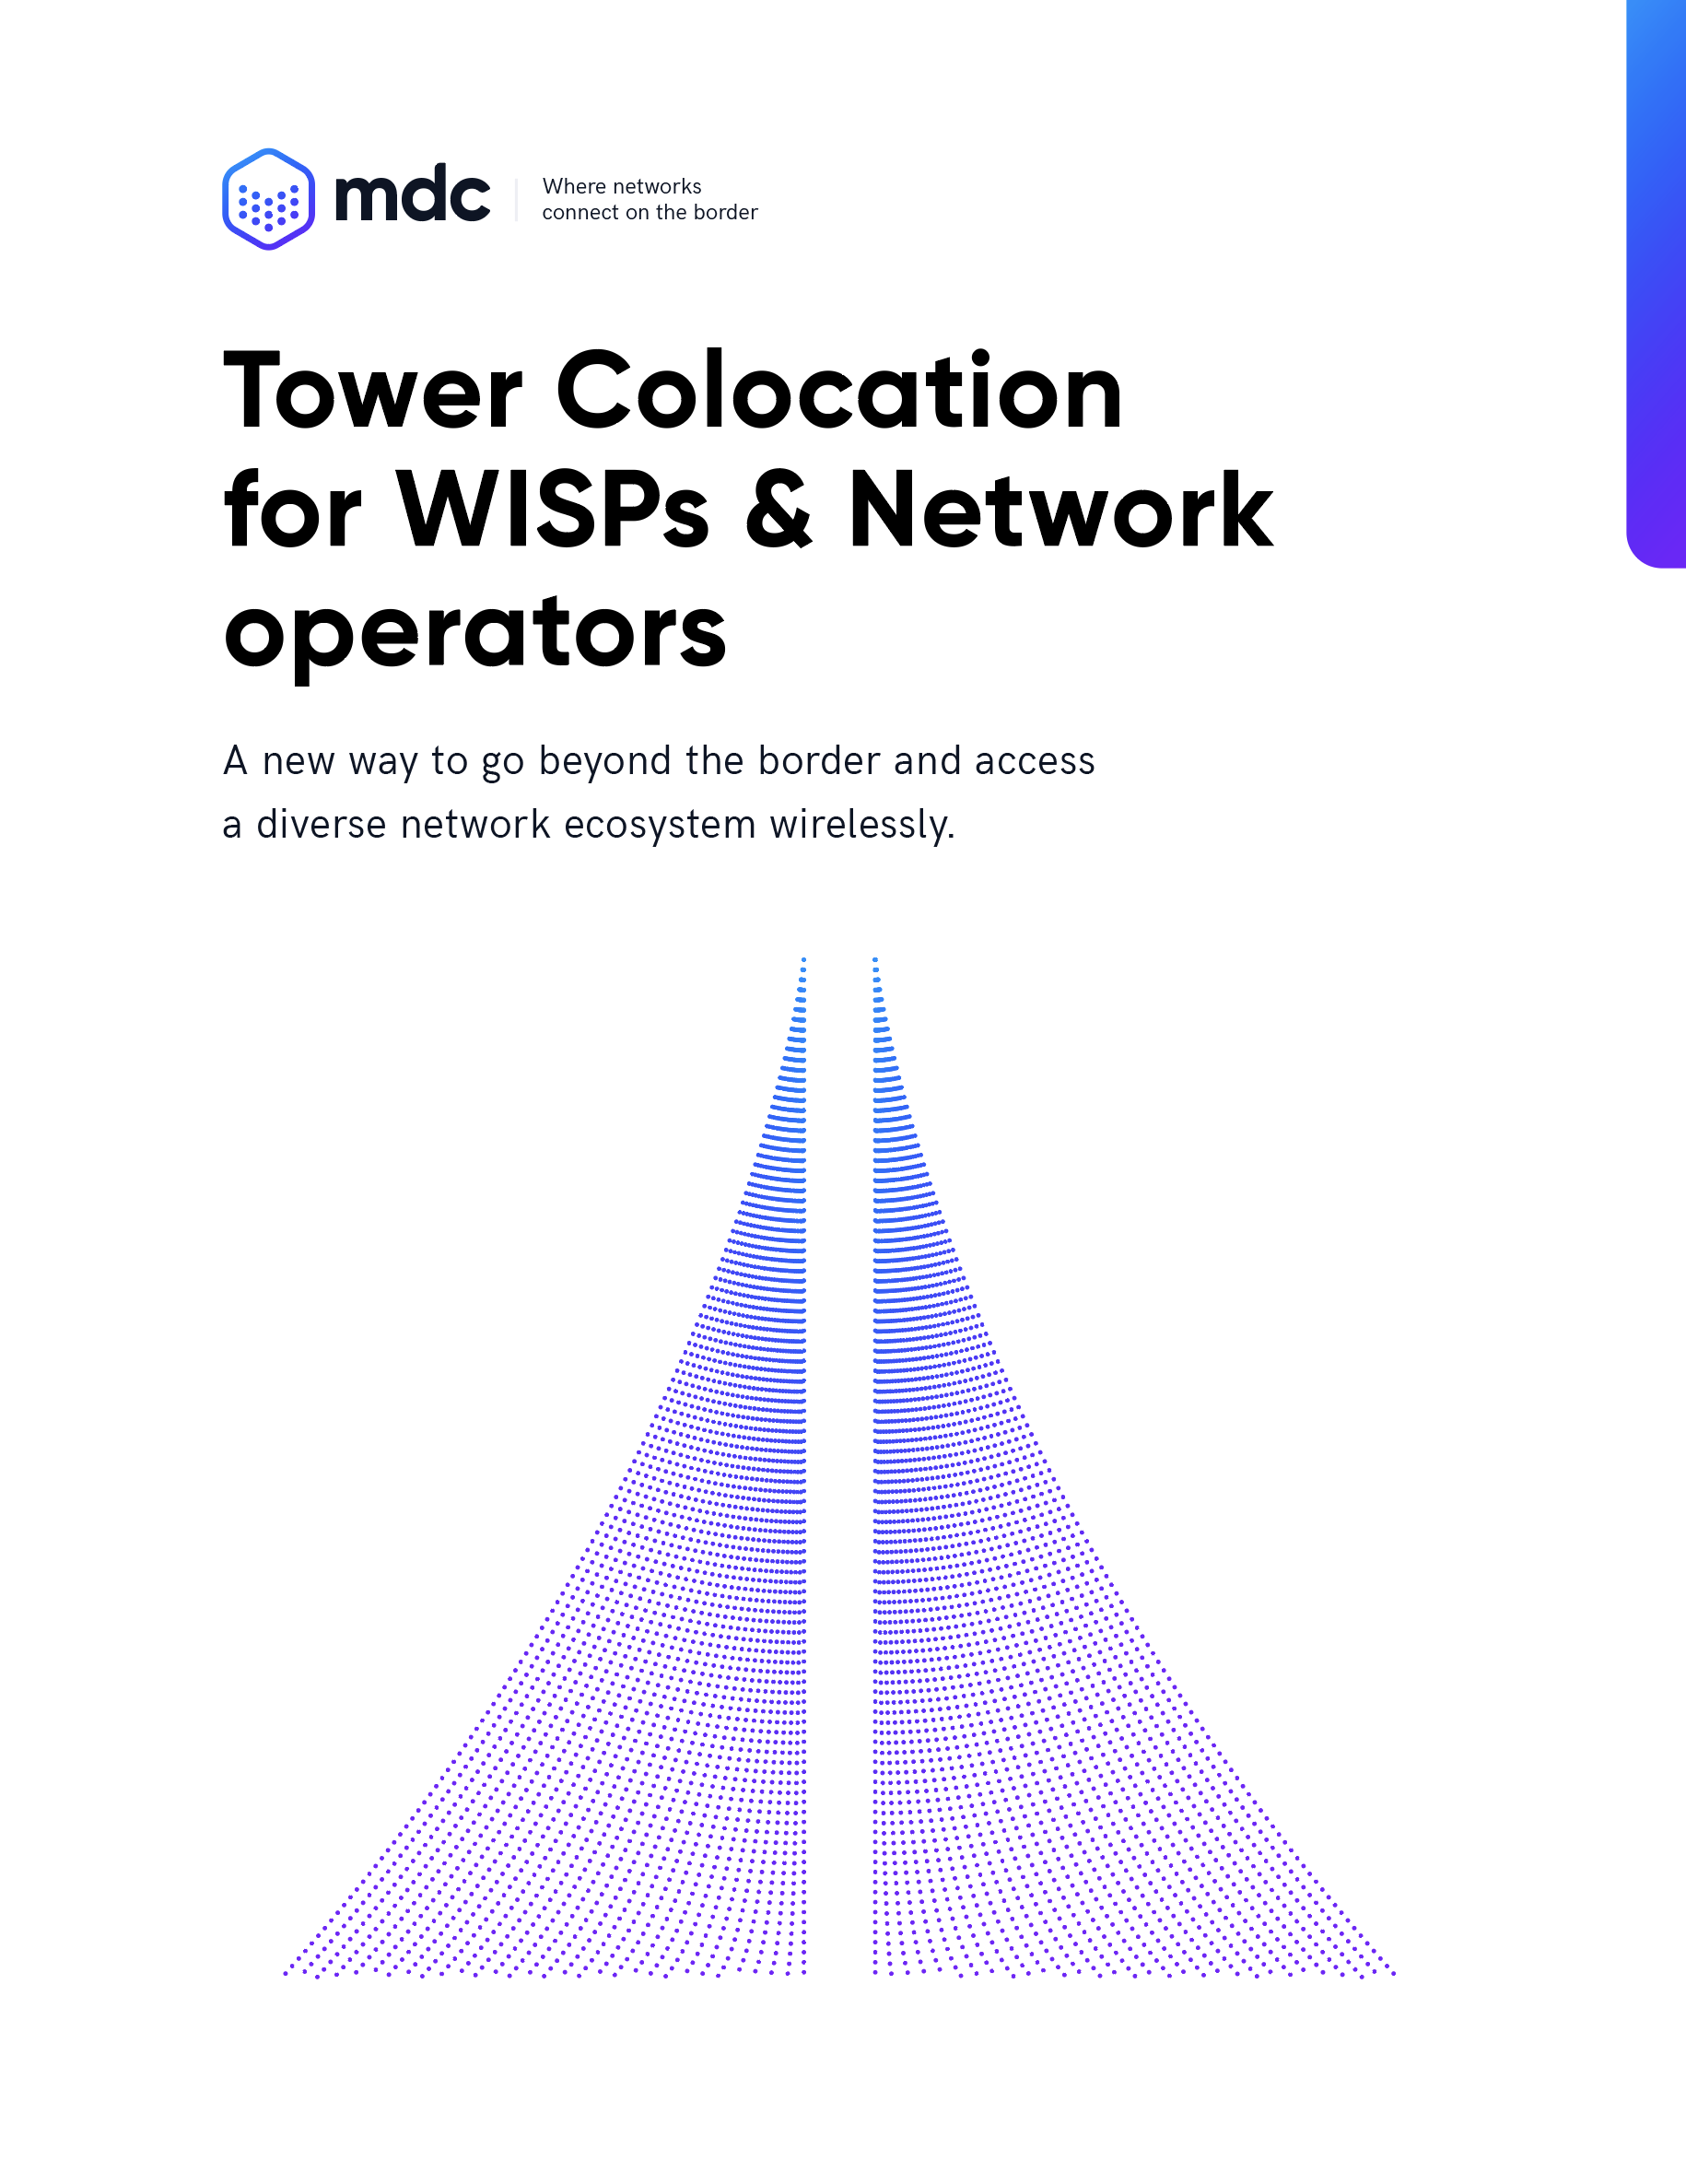 TowerColocation-cover-EN